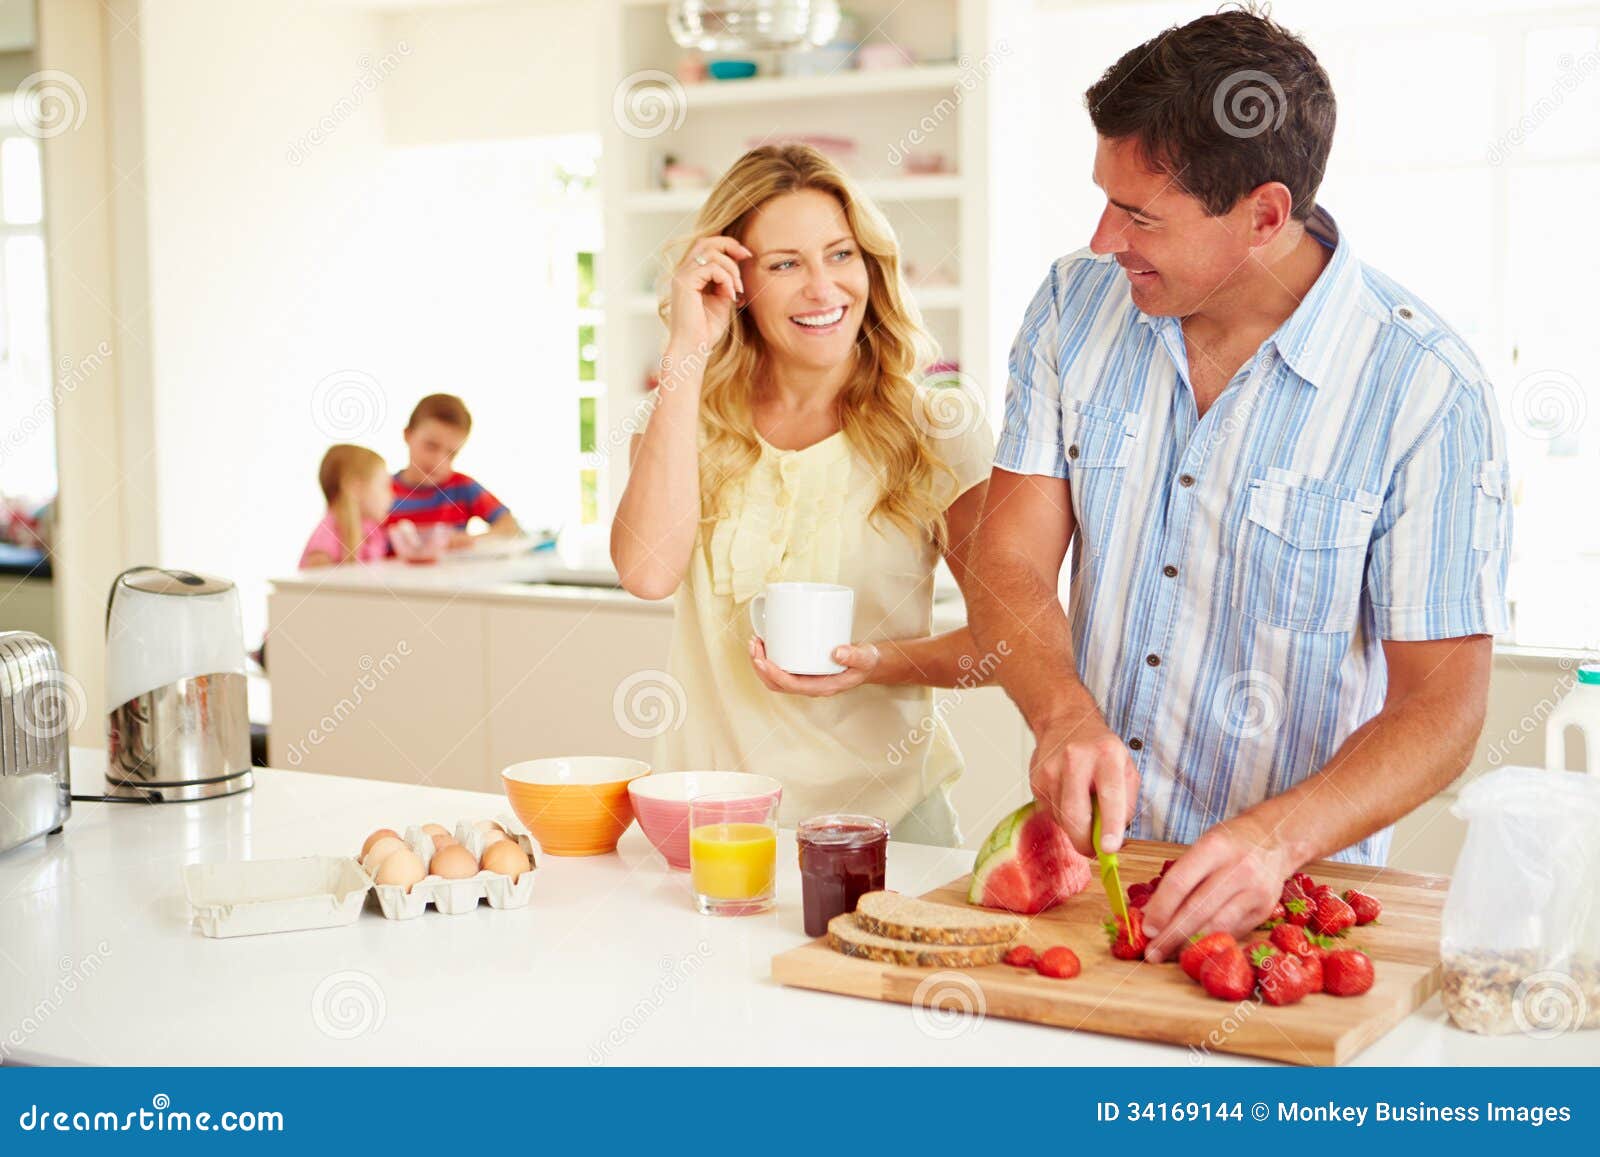 parents preparing family breakfast in kitchen